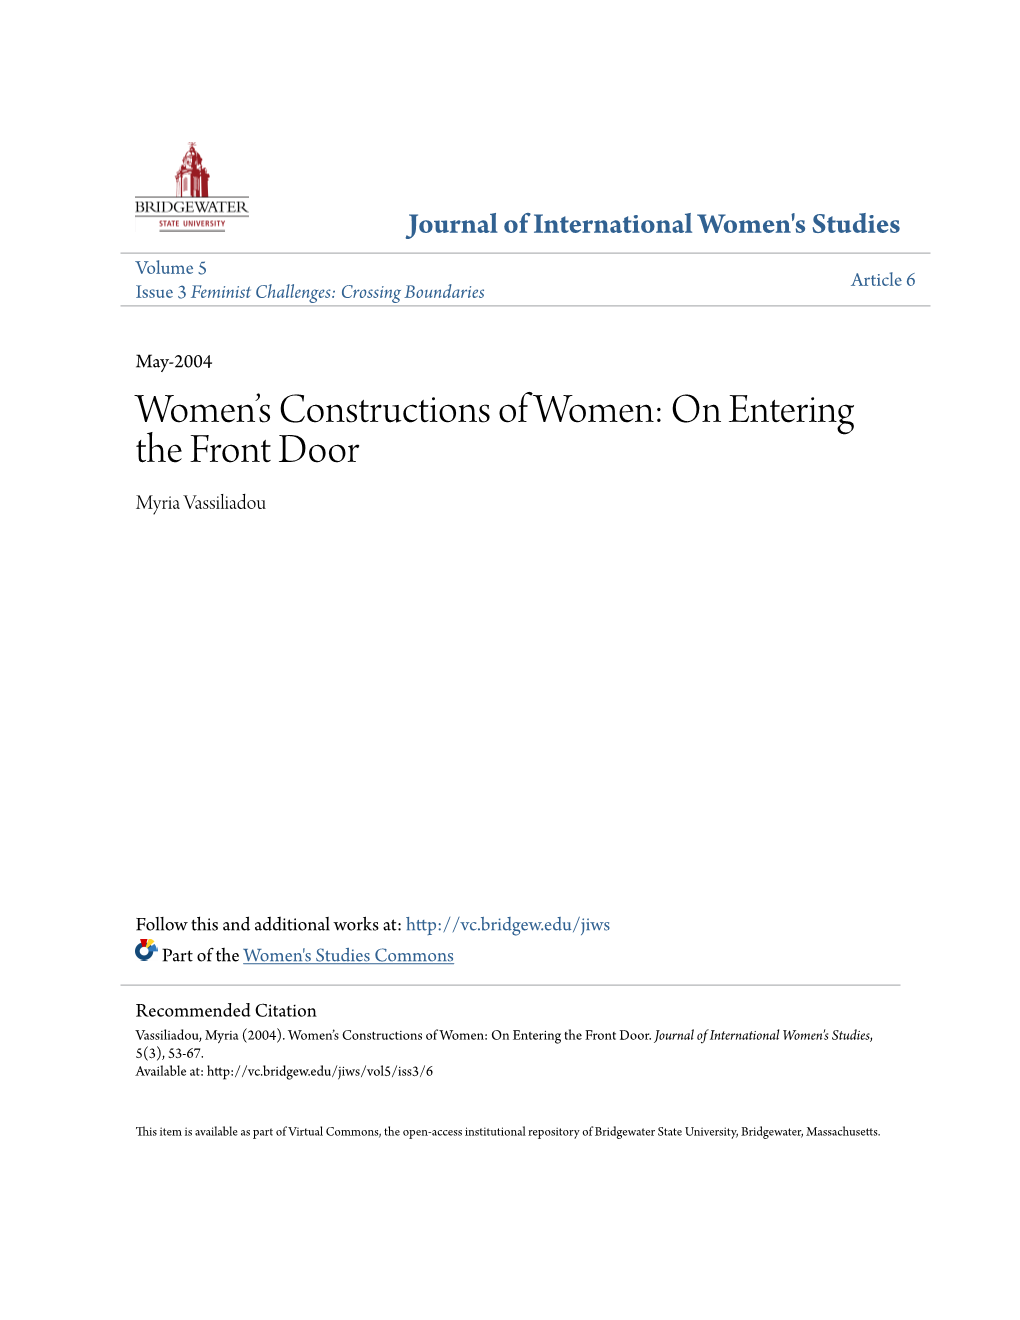 Women's Constructions of Women